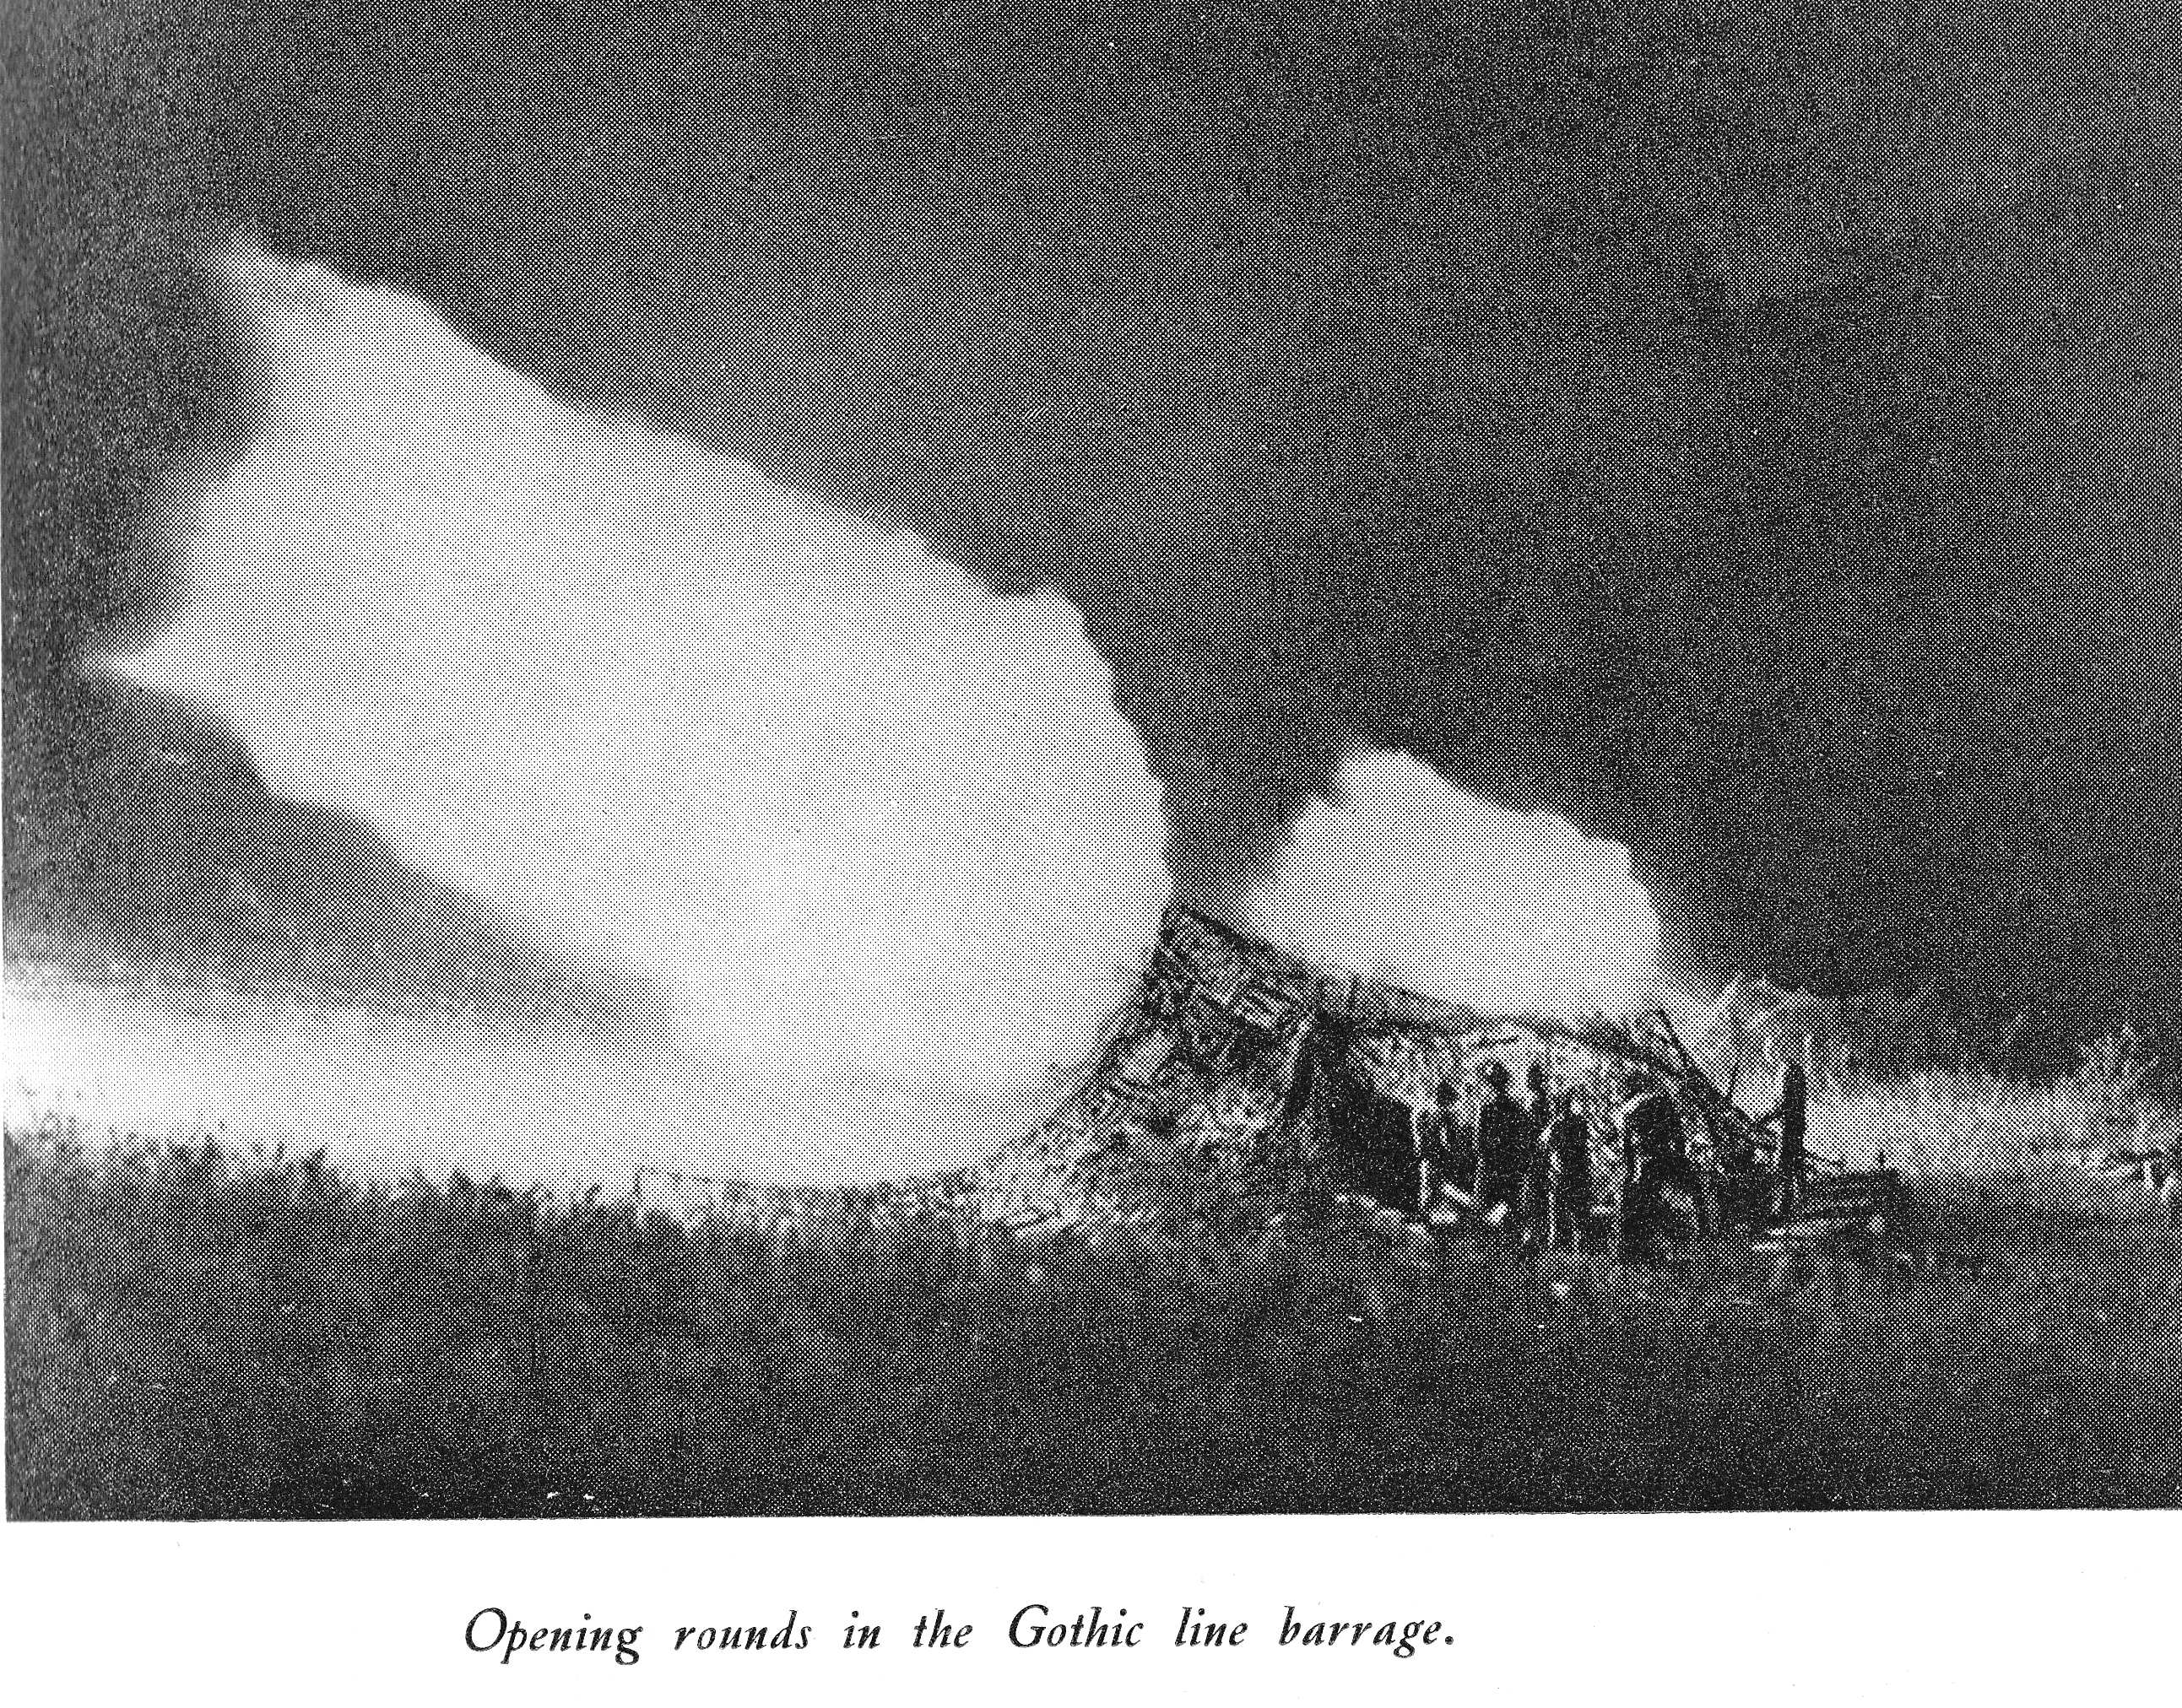 guns firing before dawn in the Gothic line barrage